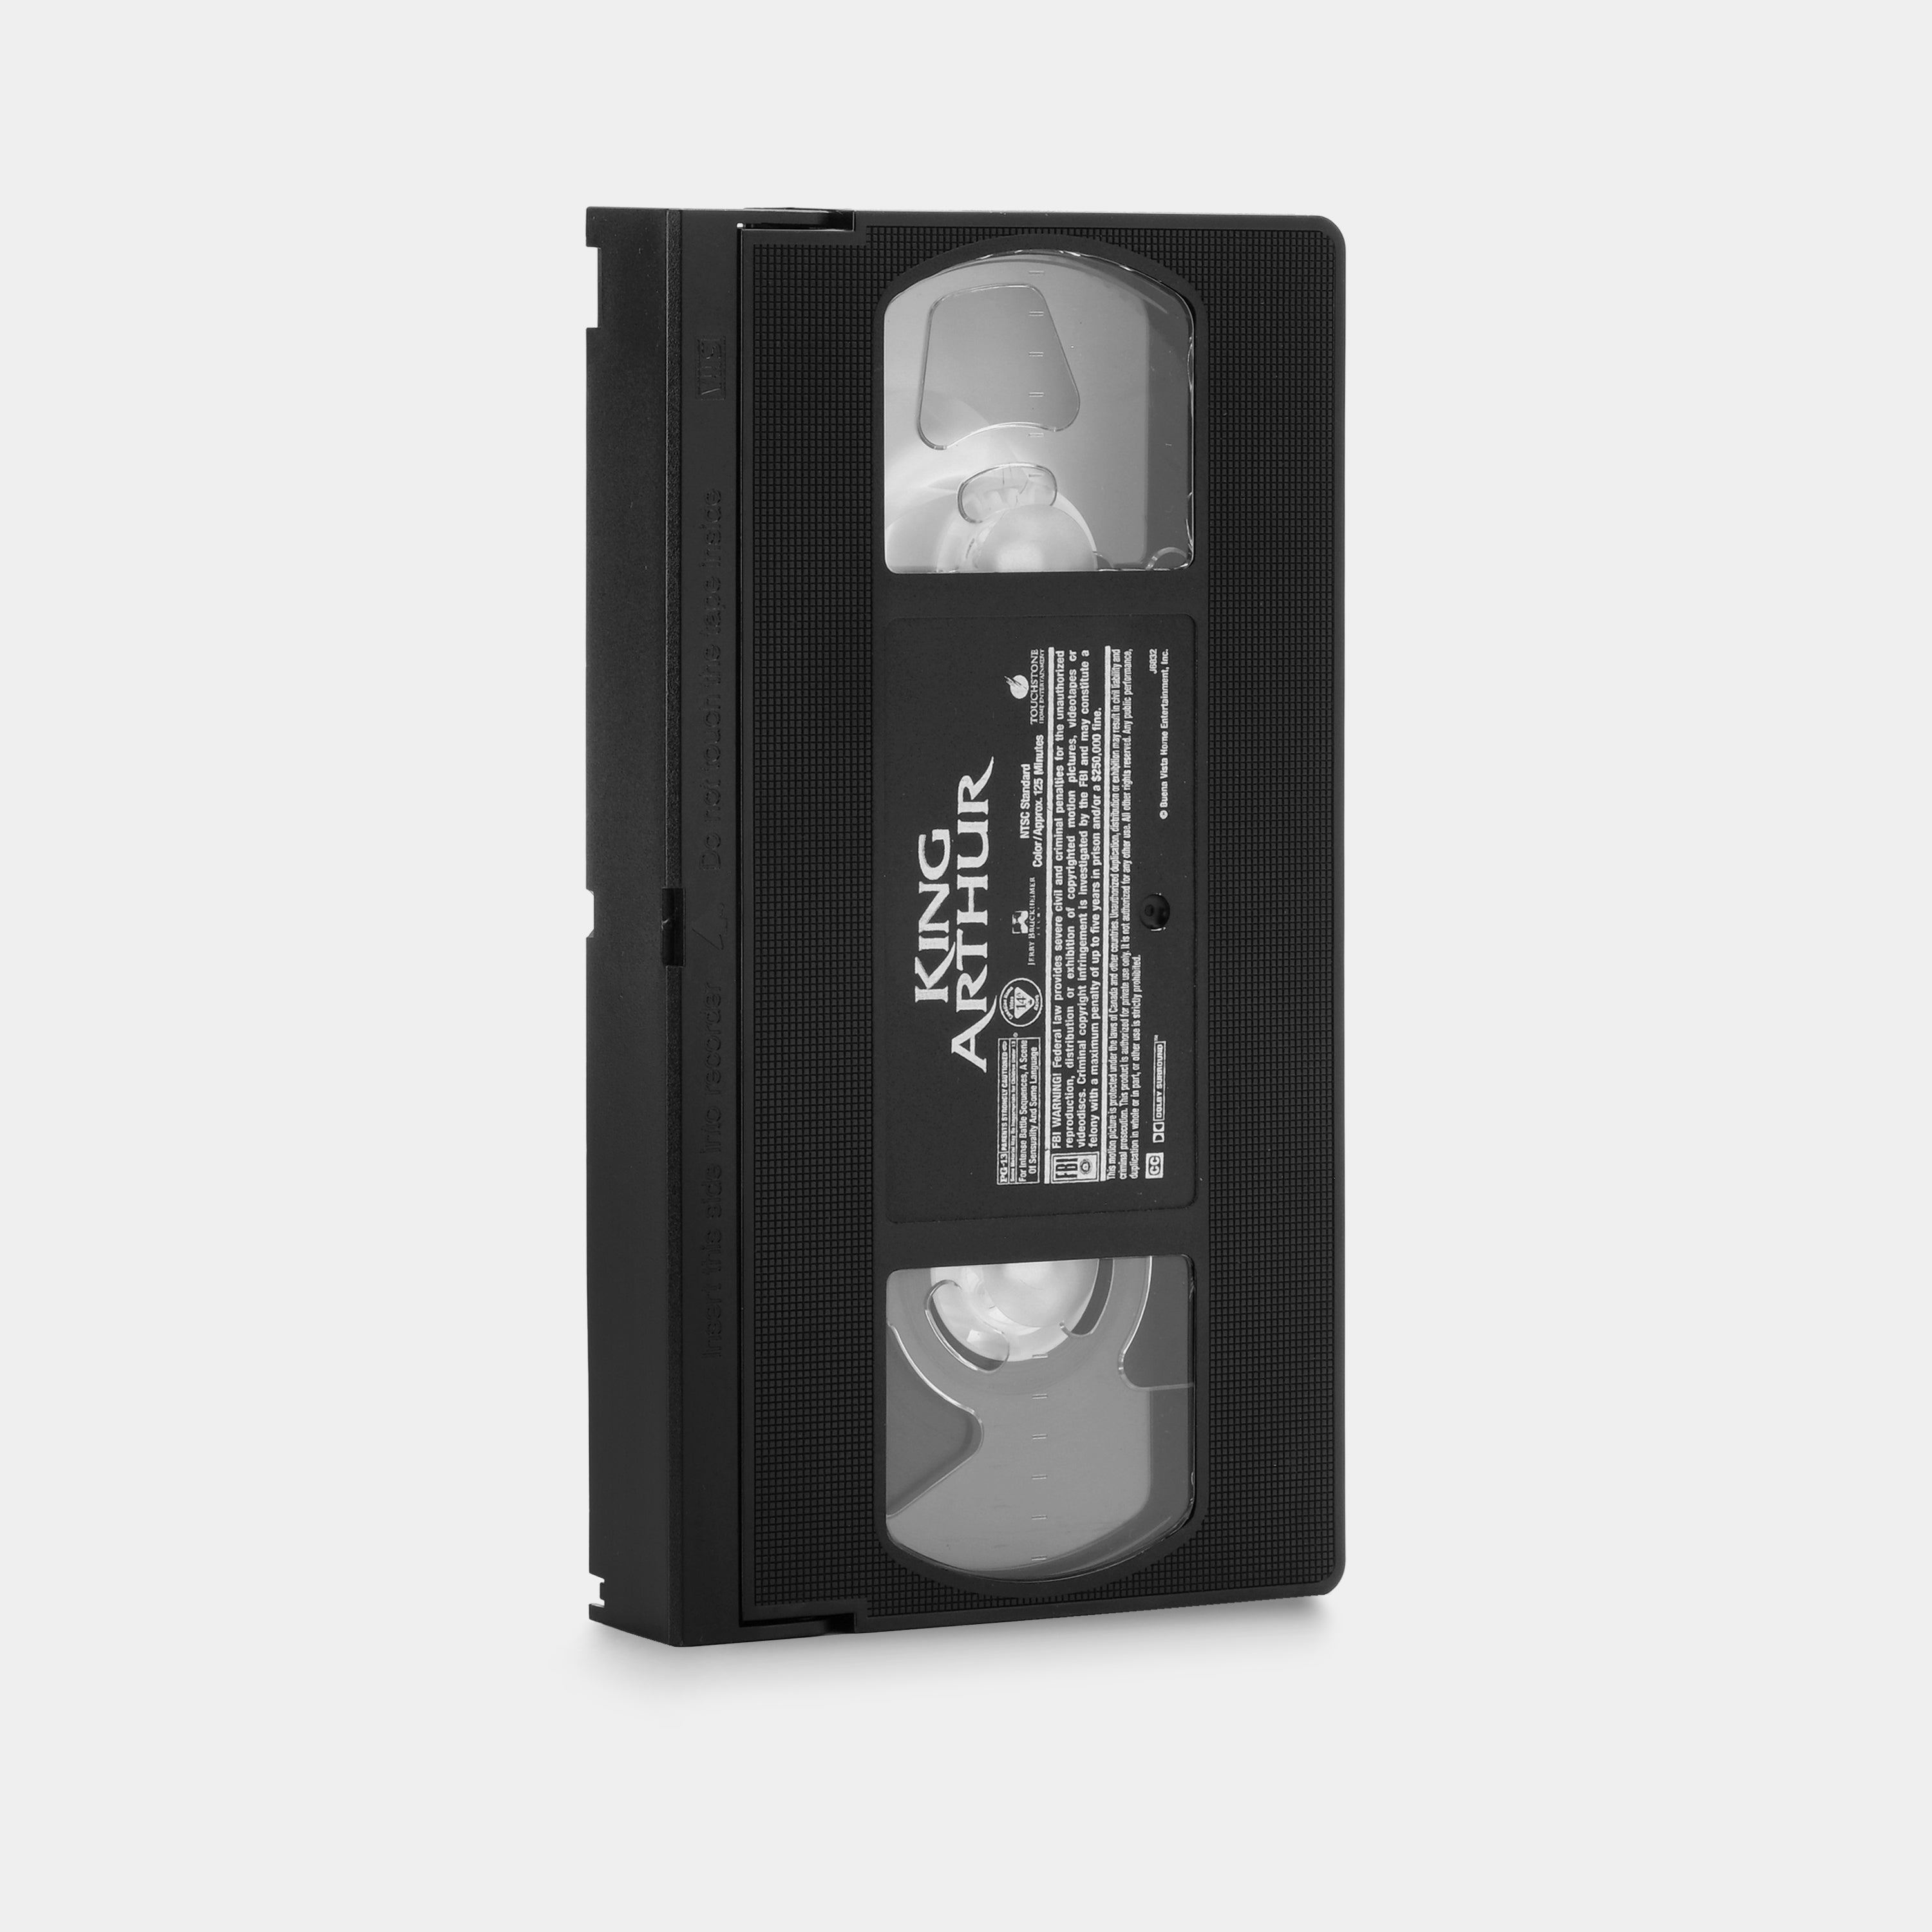 King Arthur VHS Tape